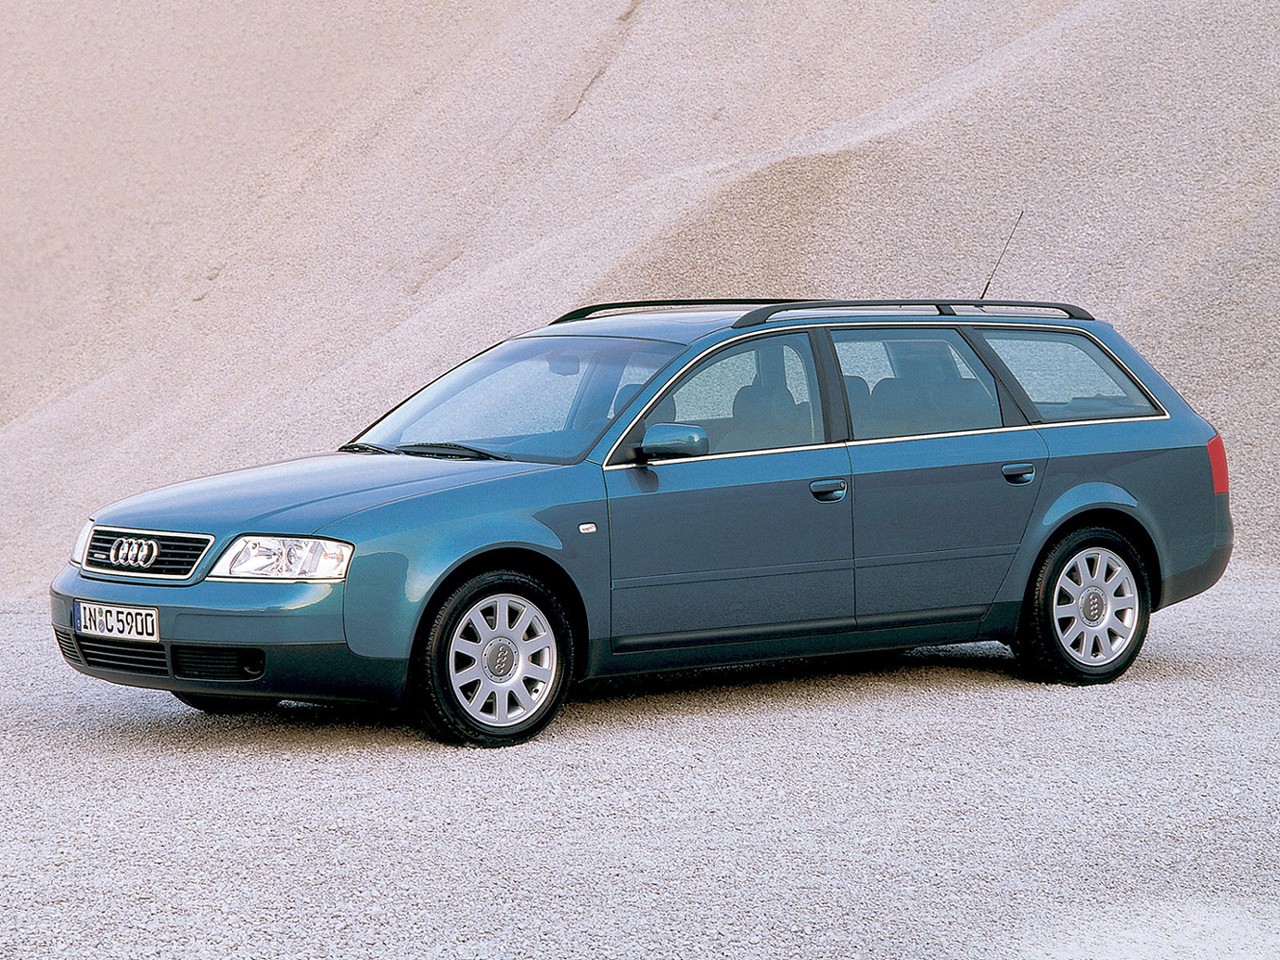 AUDI A6 Avant - 1998, 1999, 2000, 2001 - autoevolution